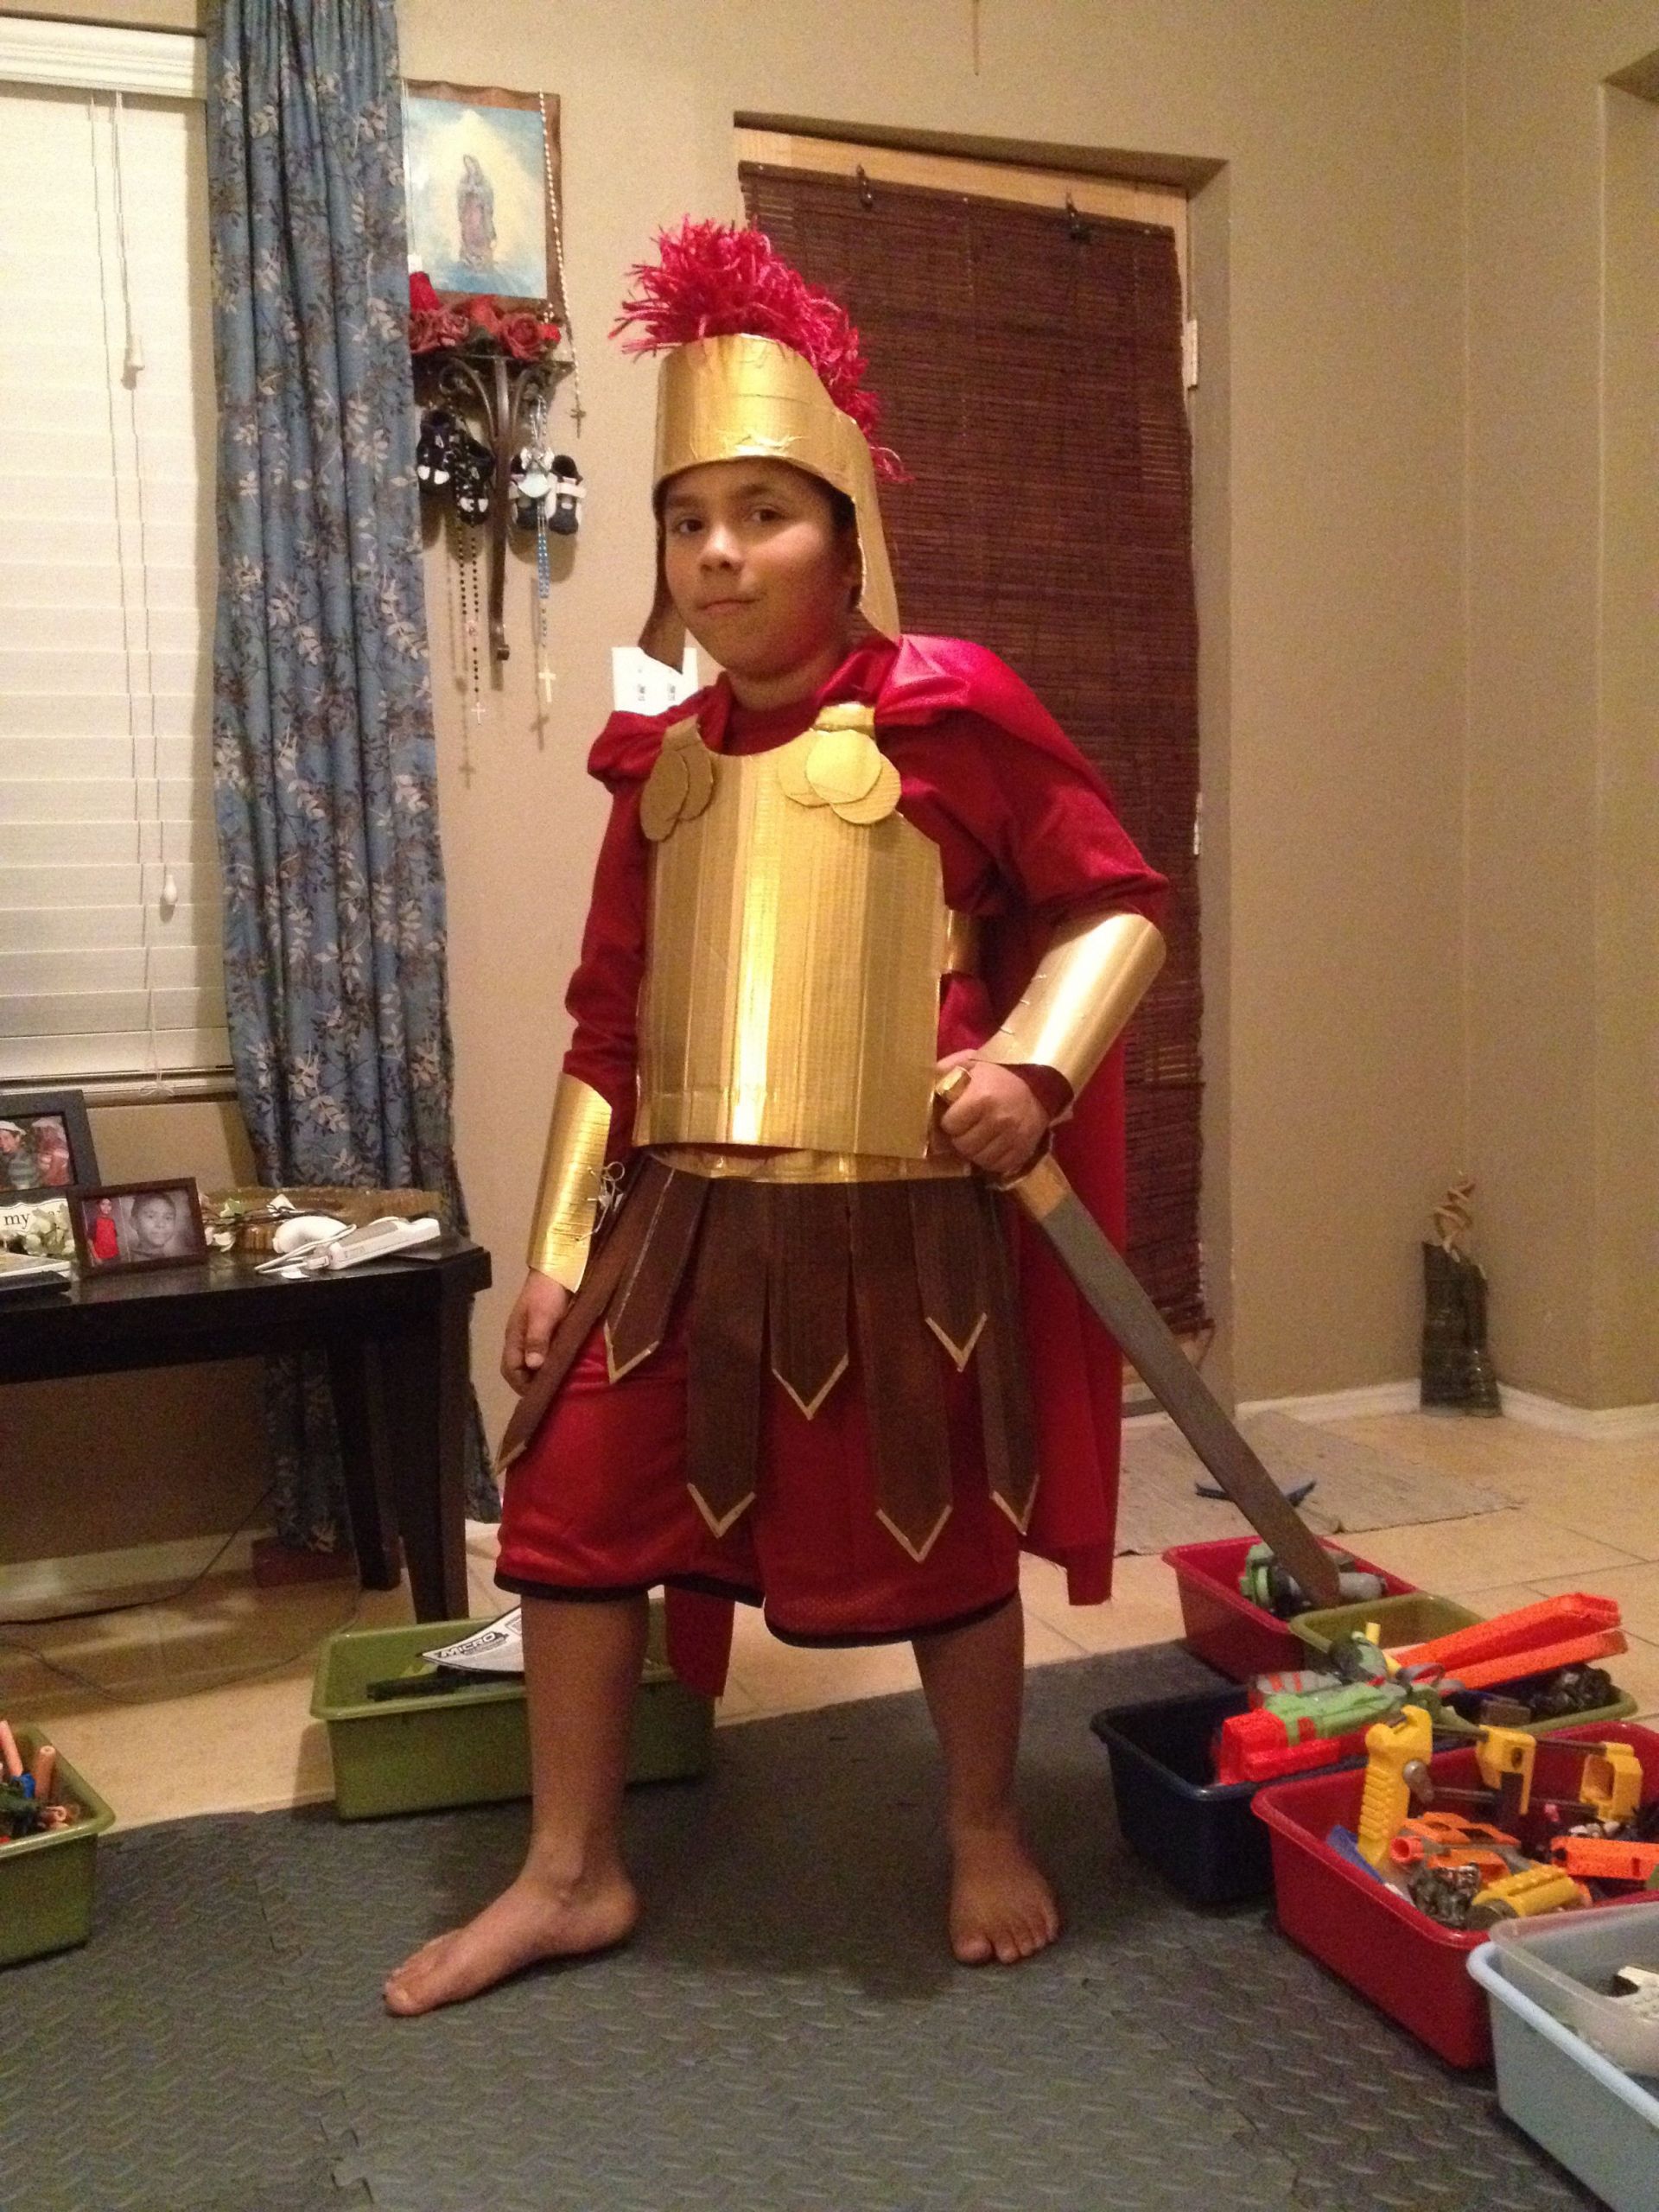 DIY Gladiator Costume
 Diy duct tape Roman costume gold duck tape and cardboard